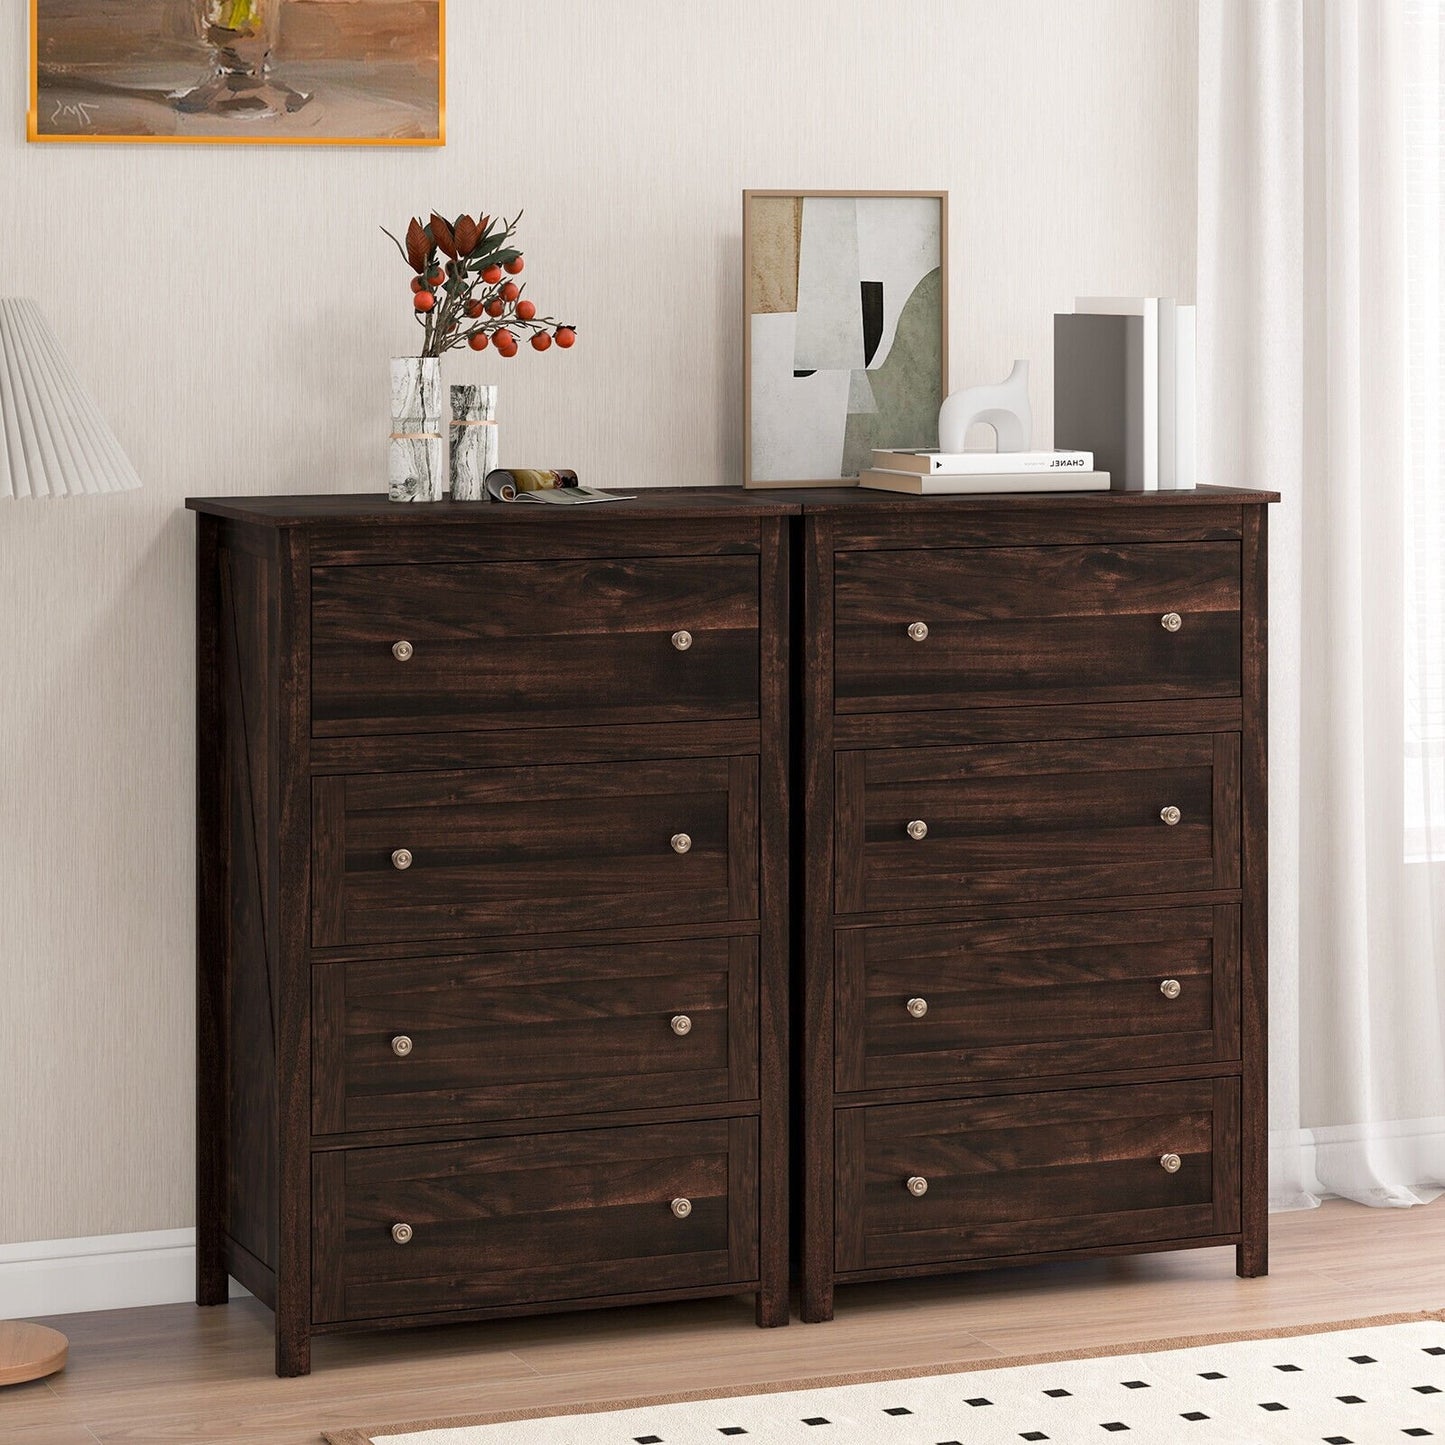 4 Drawer Dresser for Closet Hallway Living Room Nursery, Brown